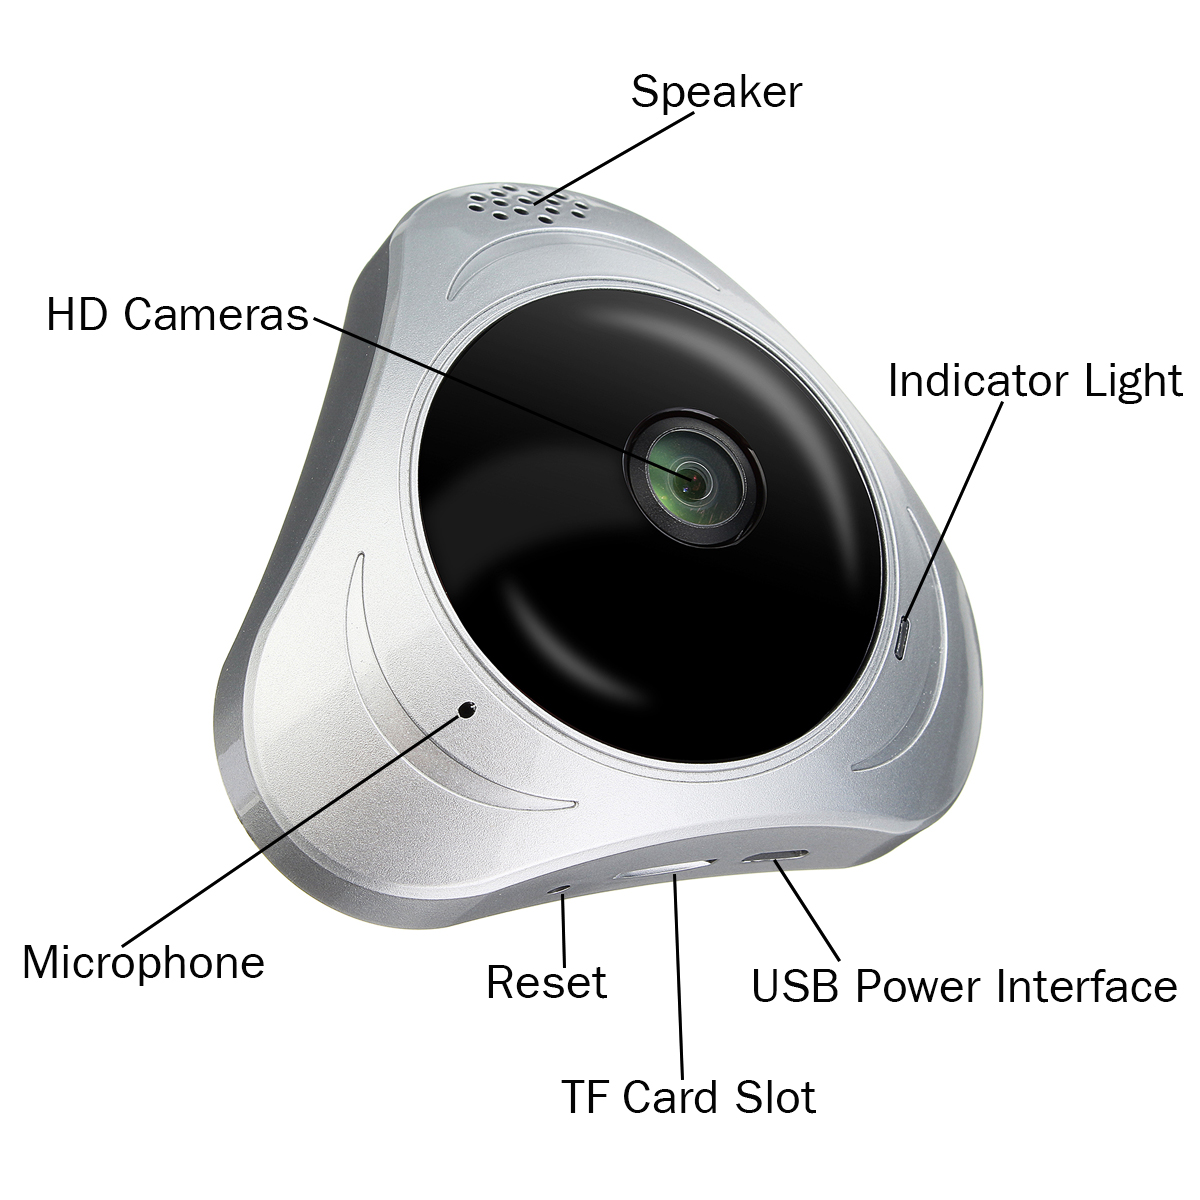 360deg-Panoramic-Monitor-3D-VR-Fisheye-Wifi-IP-Cameras-Security-Surveillance-Home-1286613